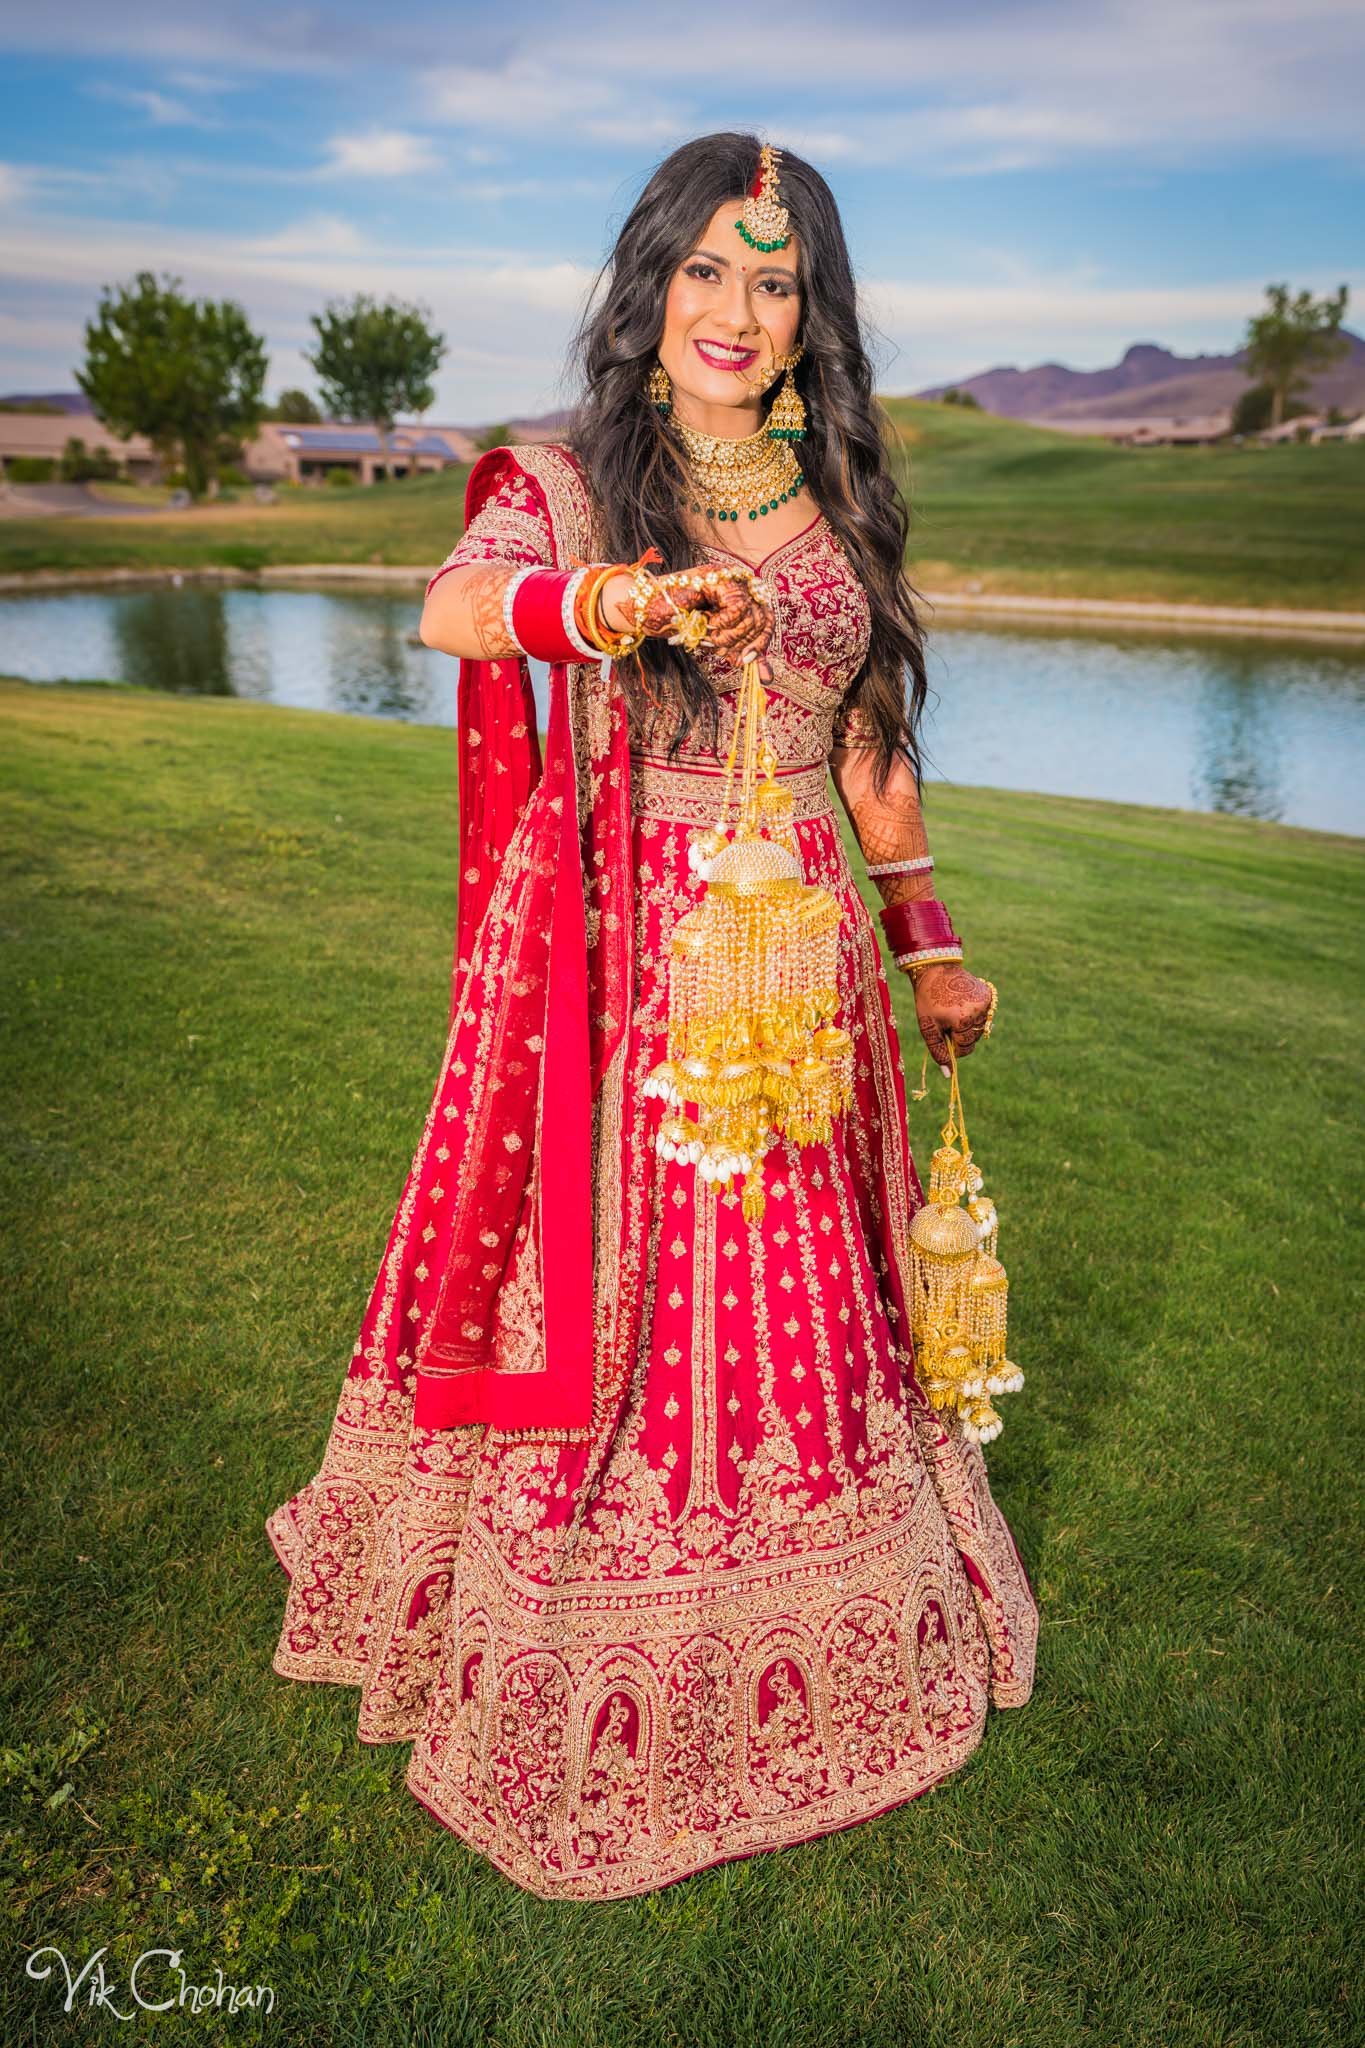 2022-06-09-Annie-&-Steven-Las-Vegas-Indian-Wedding-Ceremony-Photography-Vik-Chohan-Photography-Photo-Booth-Social-Media-VCP-249.jpg